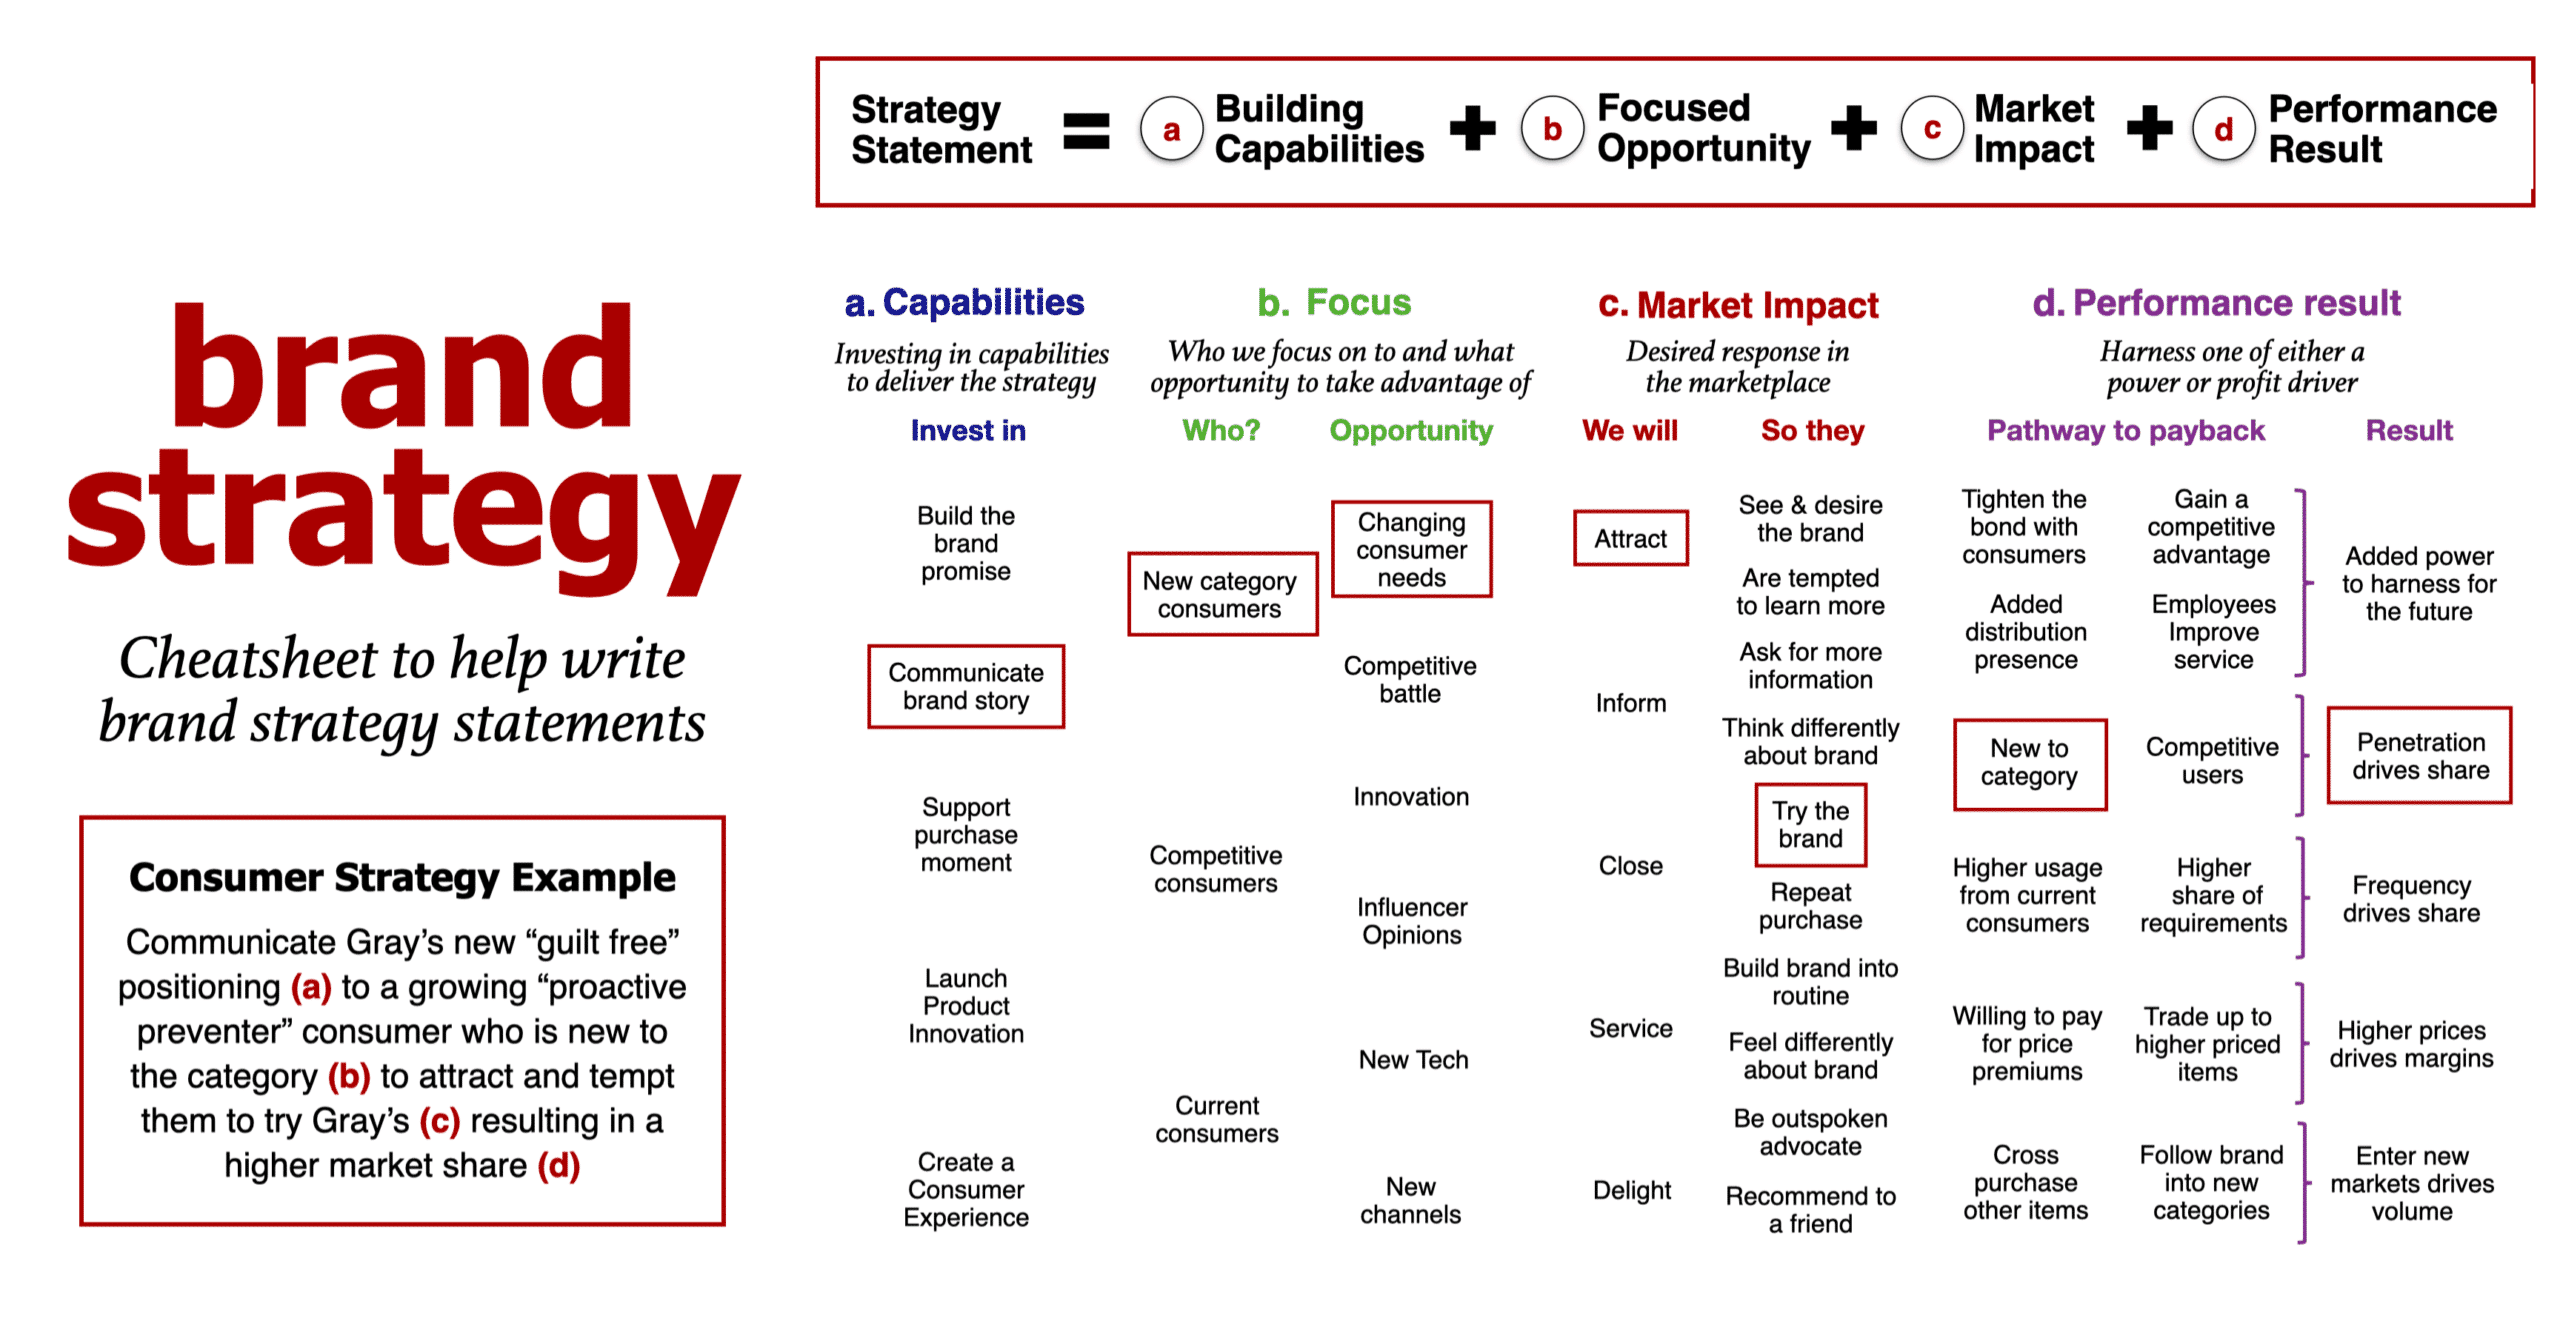 Brand Strategy Cheatsheet Consumer Strategy for the marketing plan